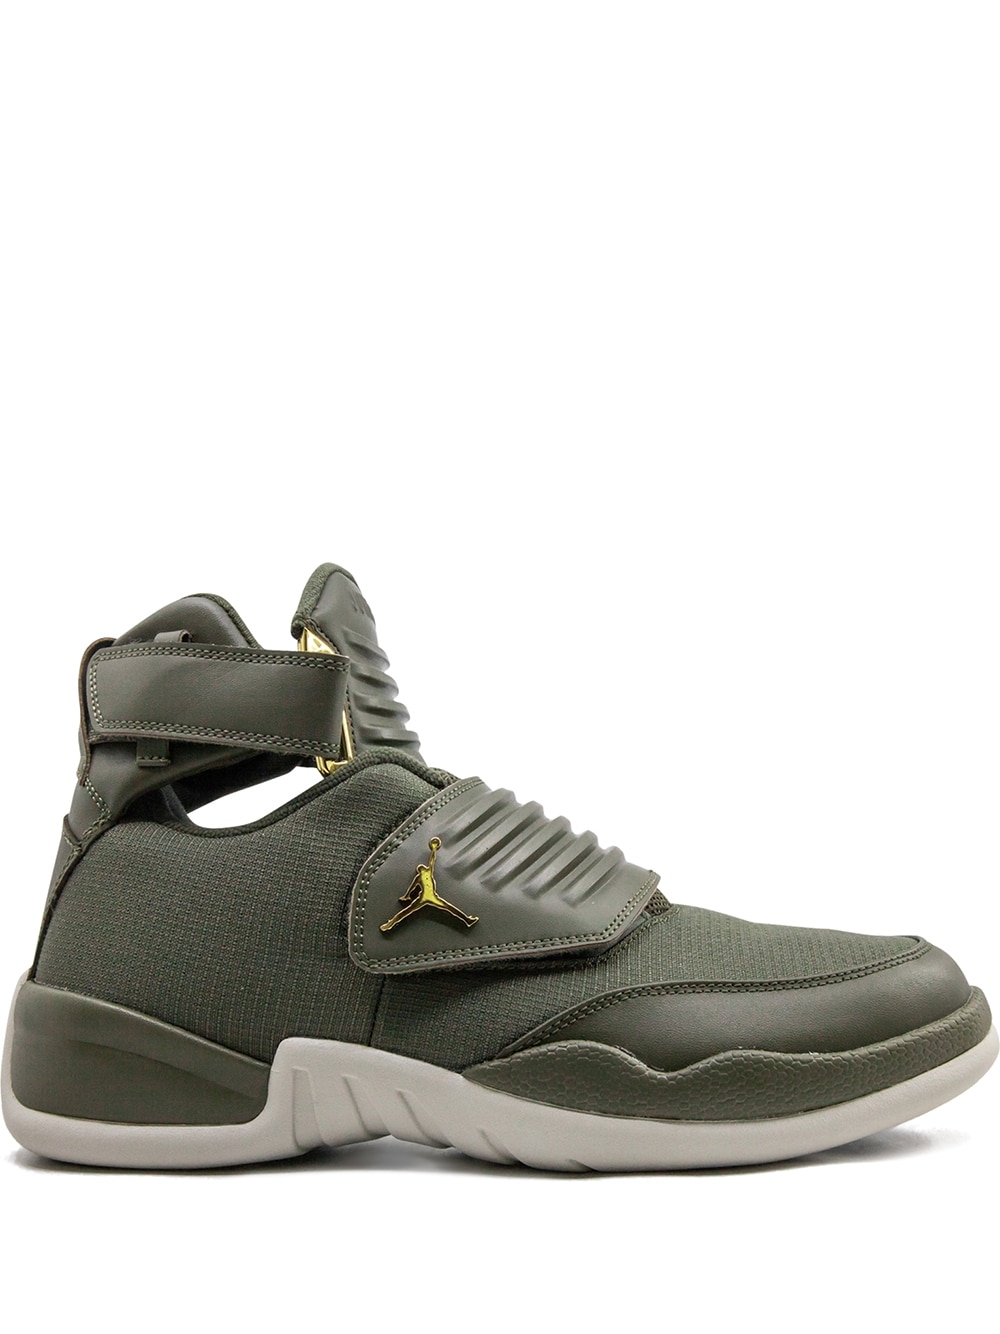 Jordan Jordan Generation 23 sneakers - Green